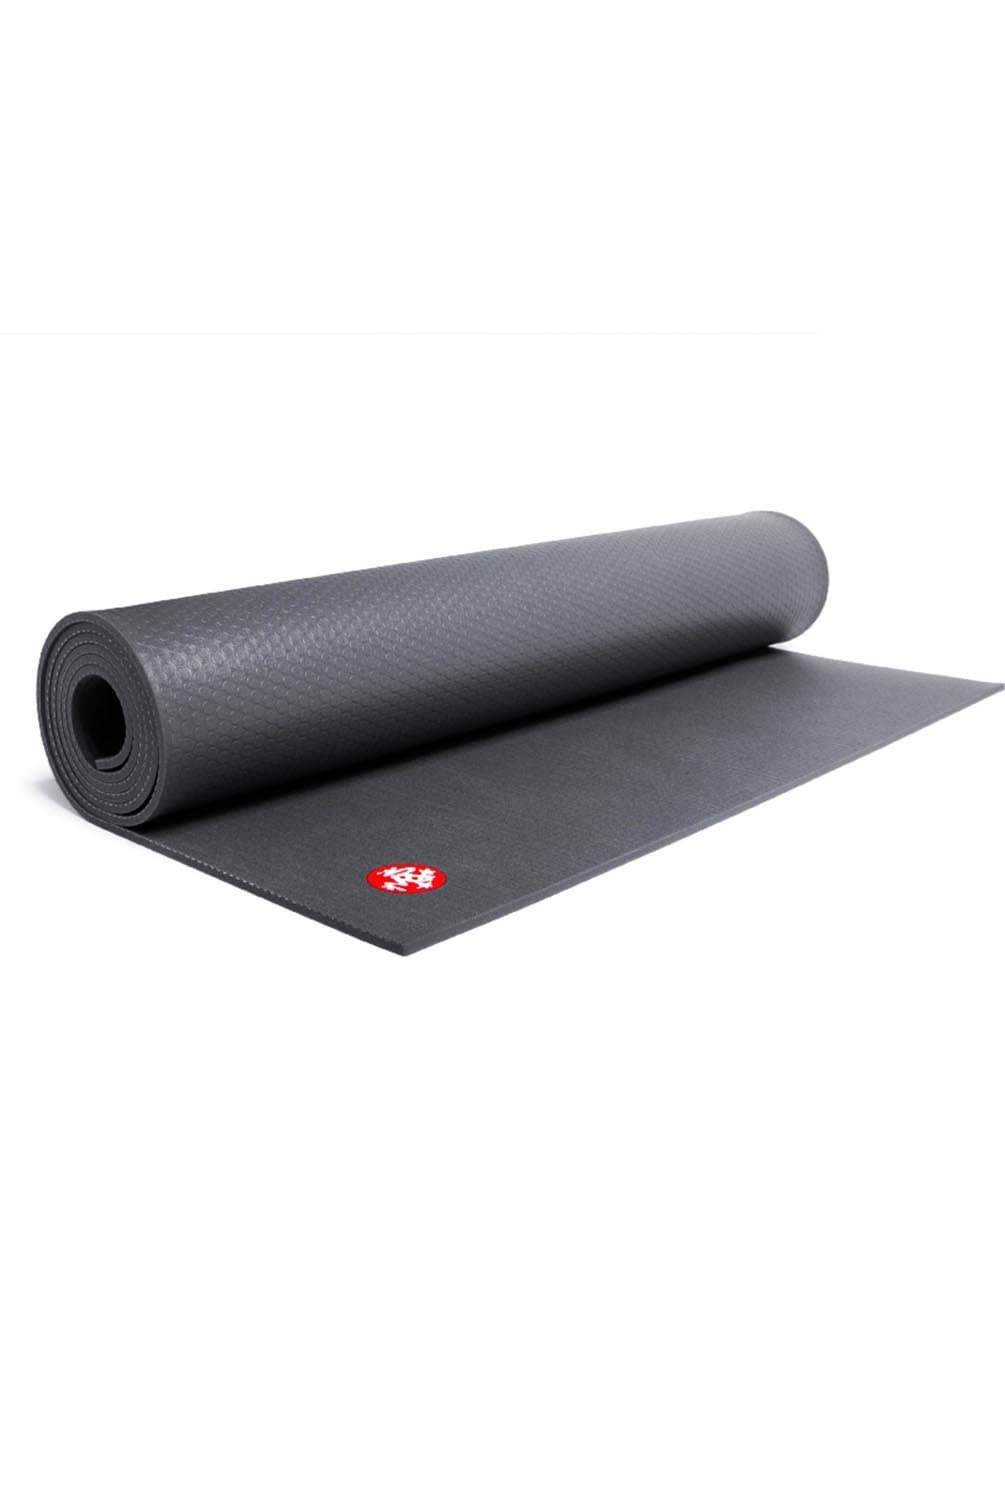 Manduka PRO Yoga and Pilates Mat, Black,71, Mats -  Canada